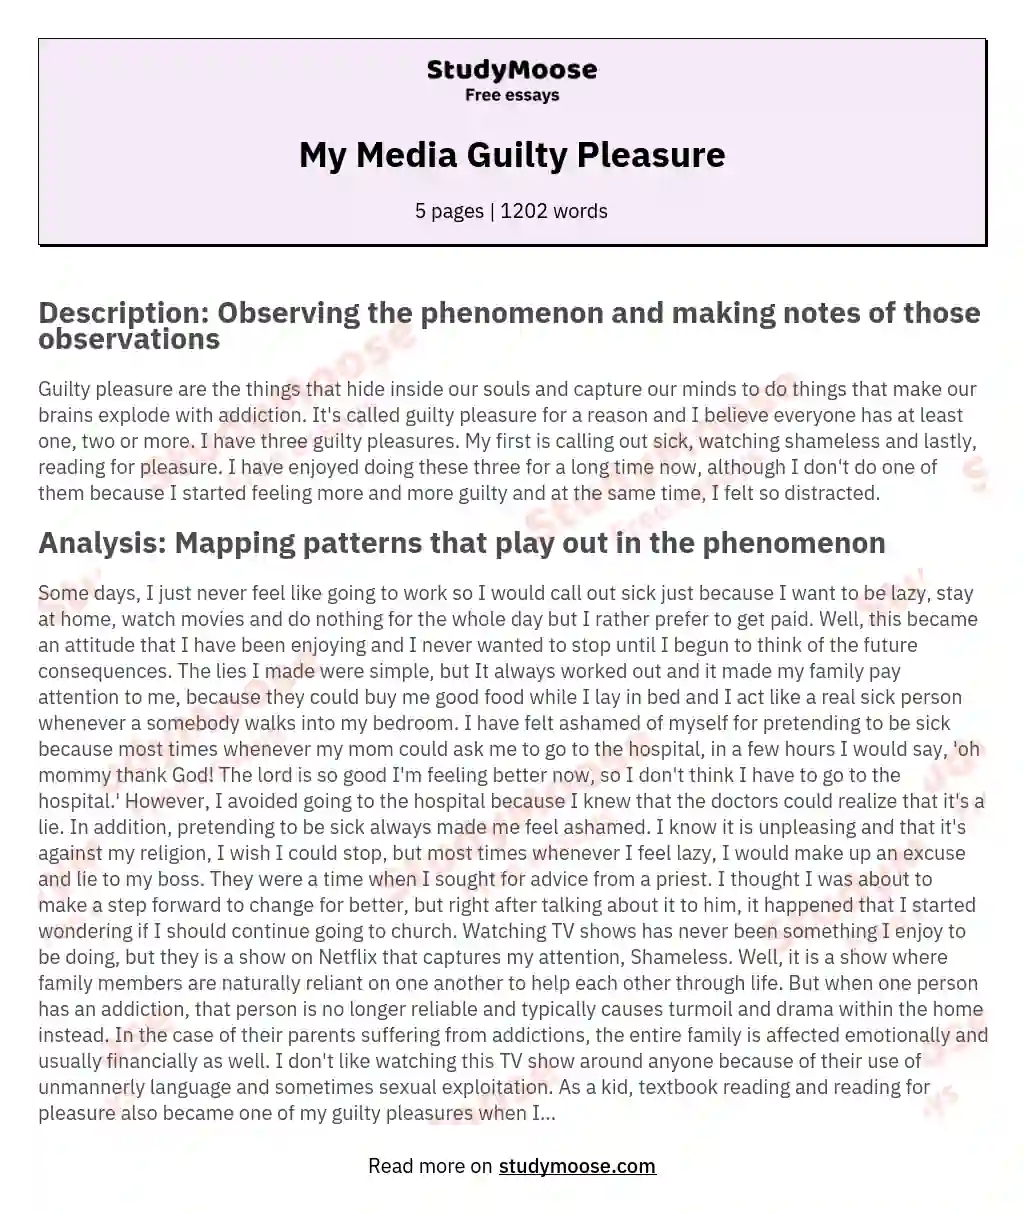 My Media Guilty Pleasure essay